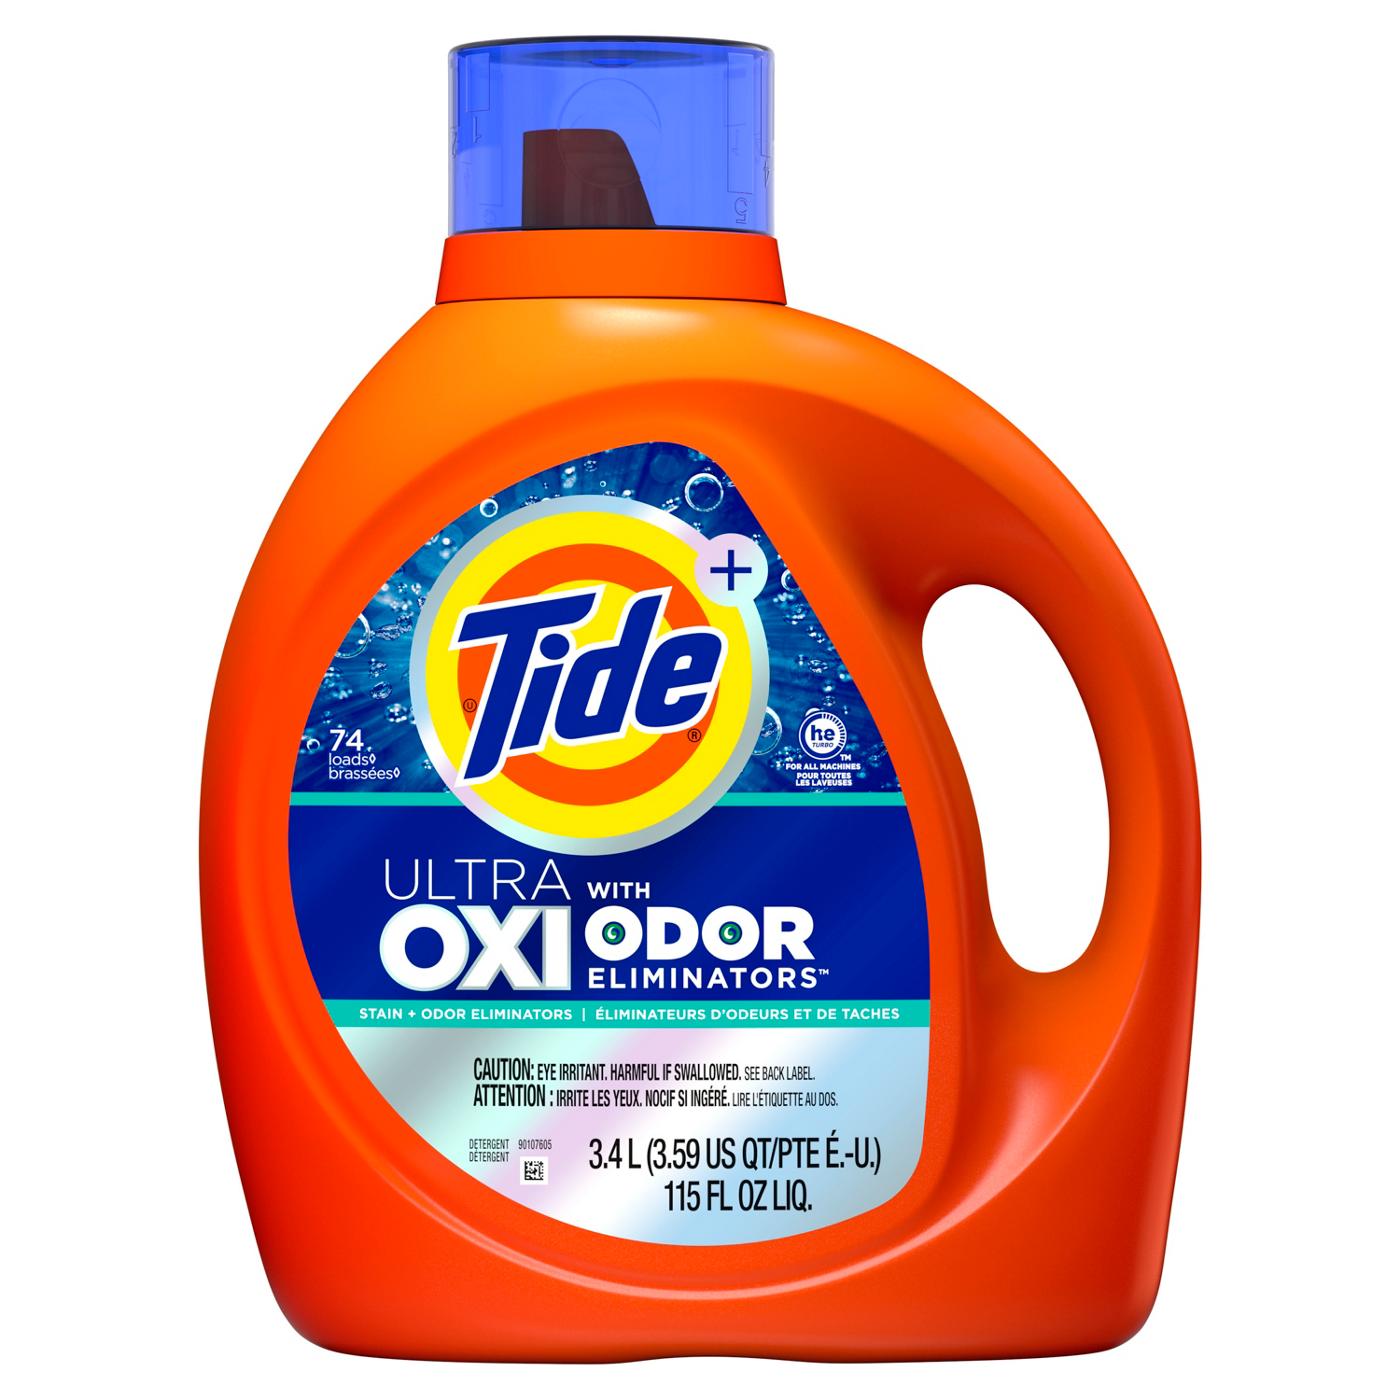 Tide + Ultra Oxi Odor Eliminators HE Turbo Clean Liquid Laundry Detergent, 59 Loads; image 1 of 9